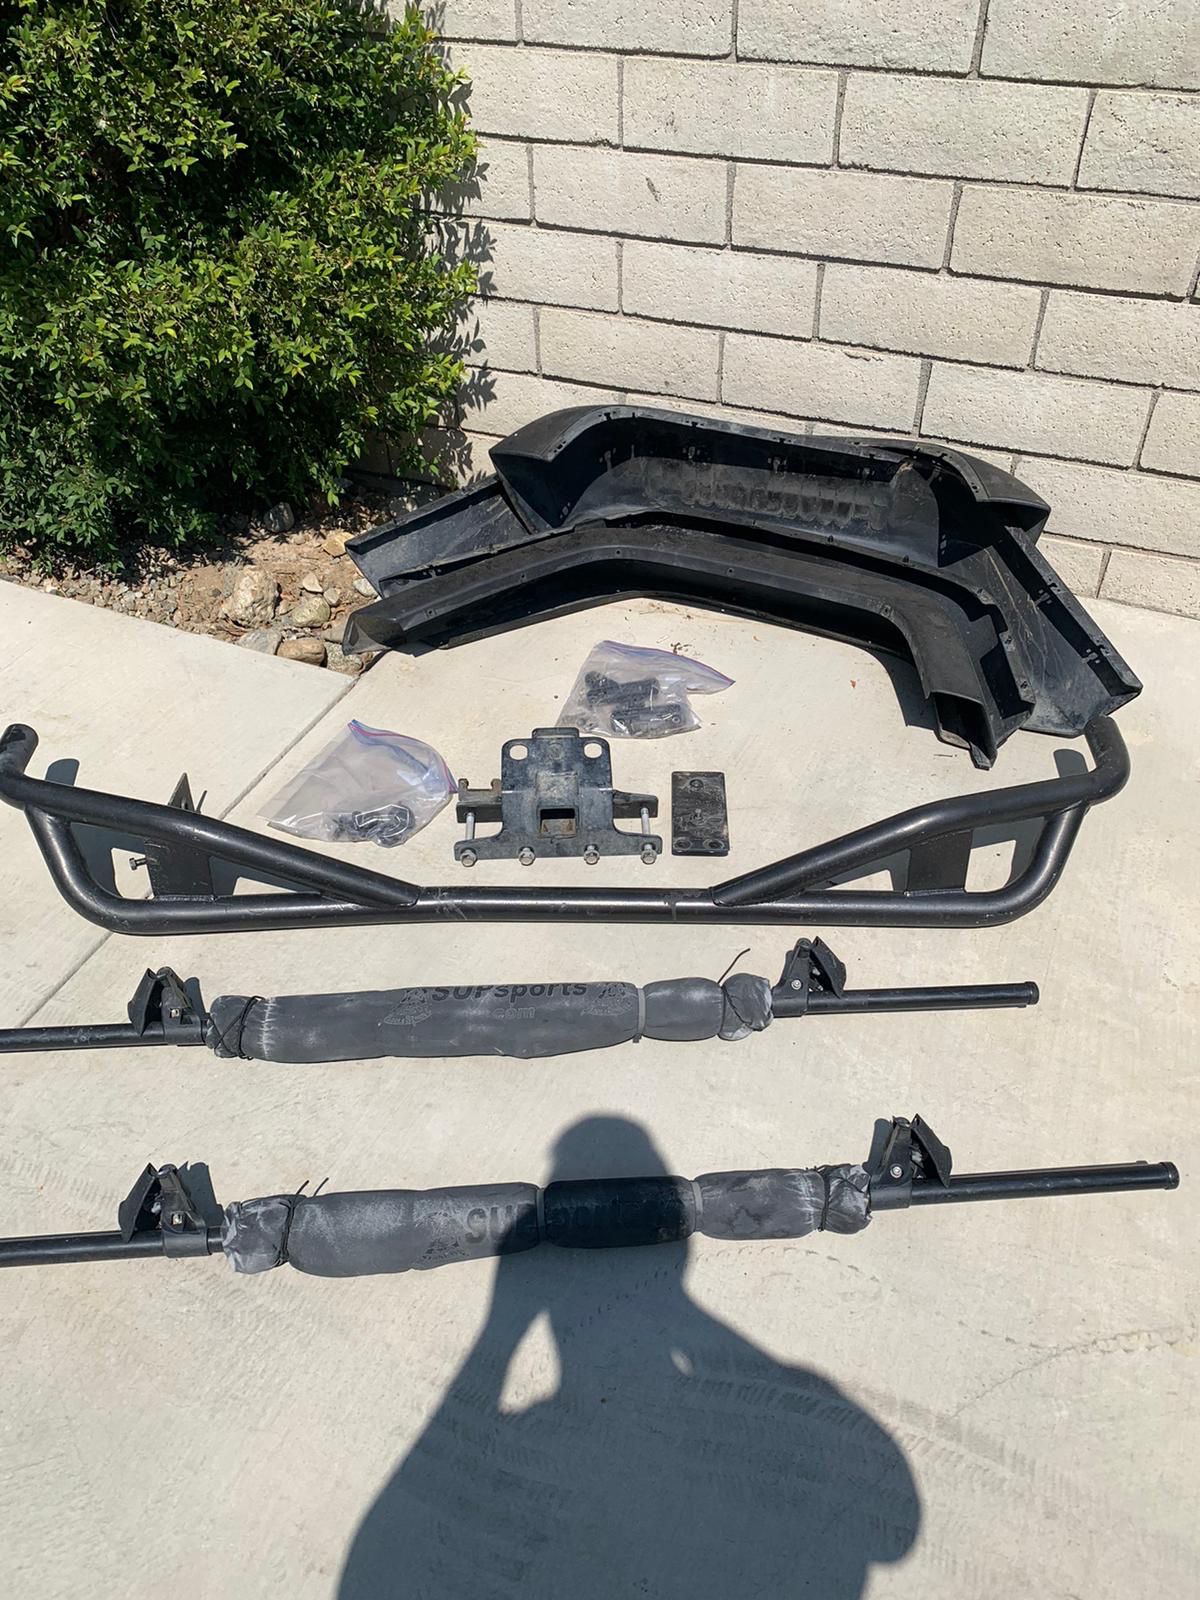 Jeep parts- fender, roof rack